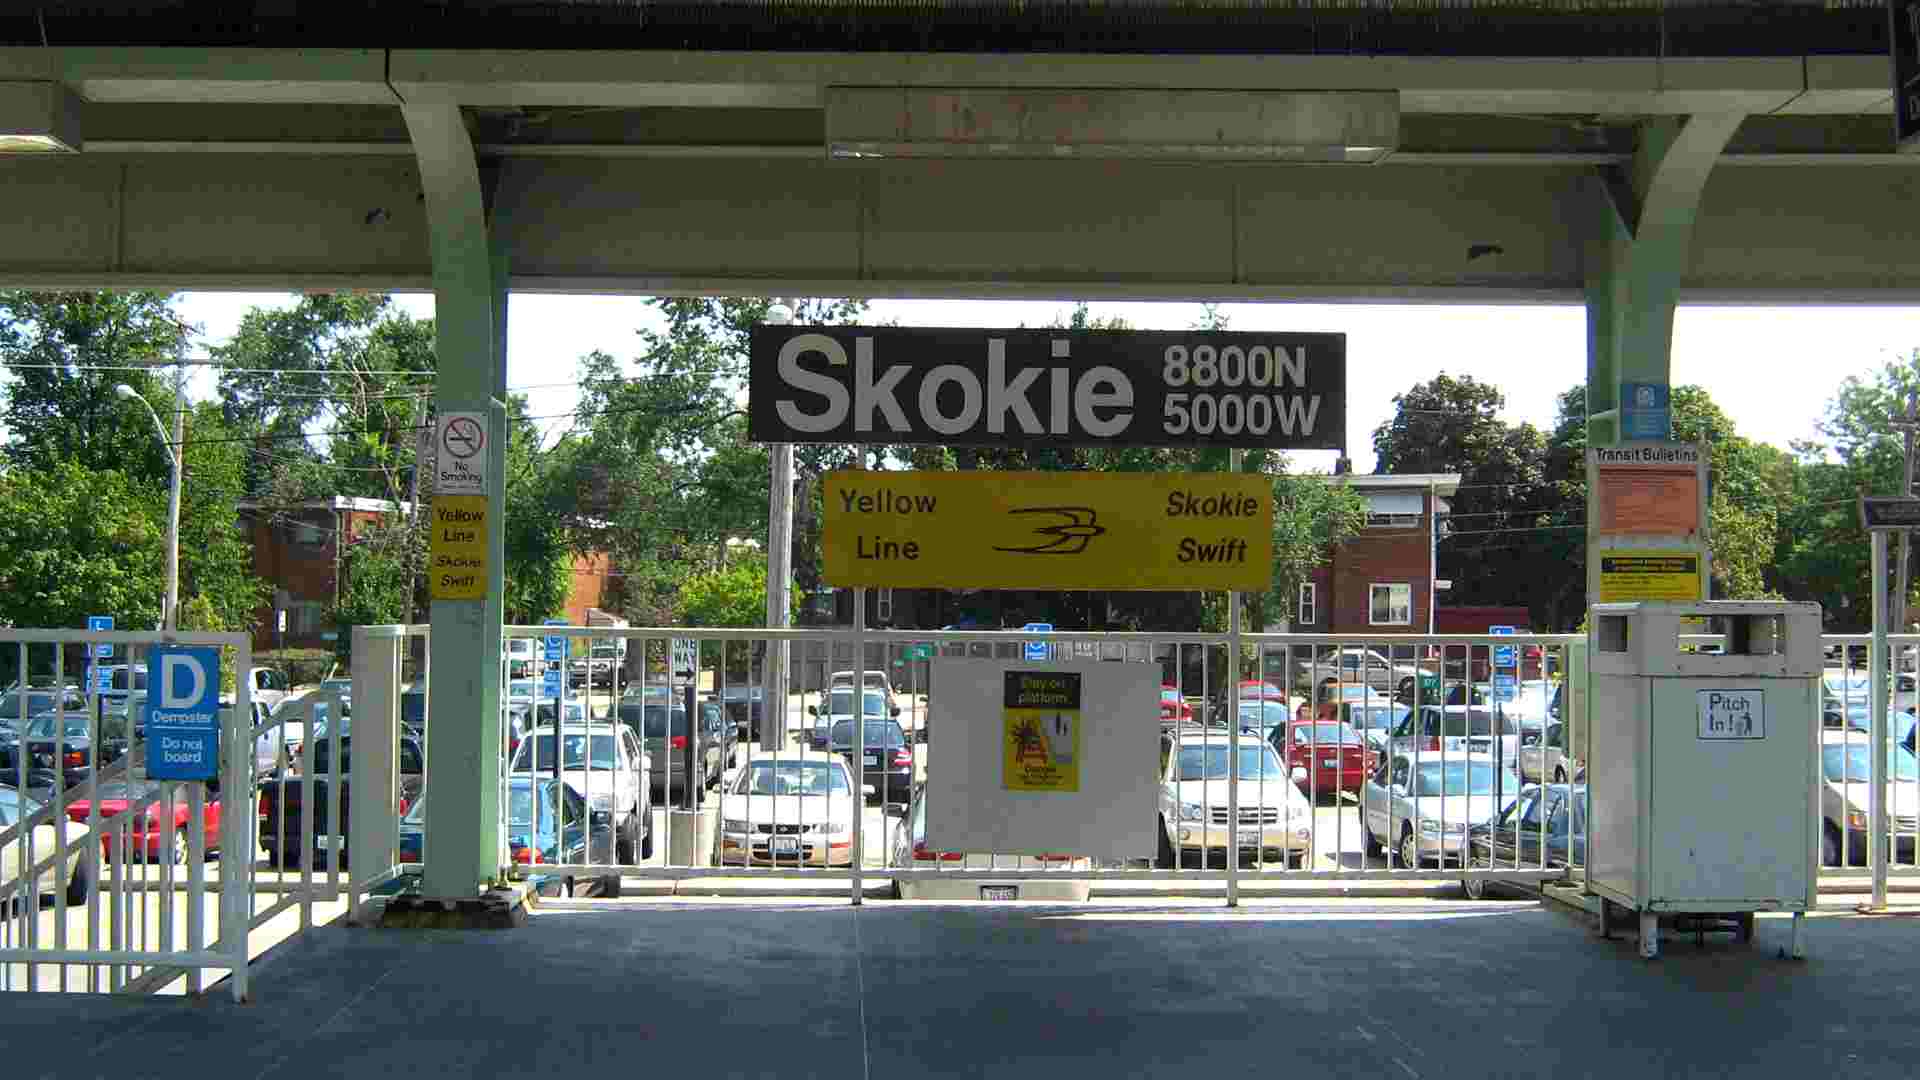 Skokie_(Dempster)_CTA_Station -wikipedia public trasnportation